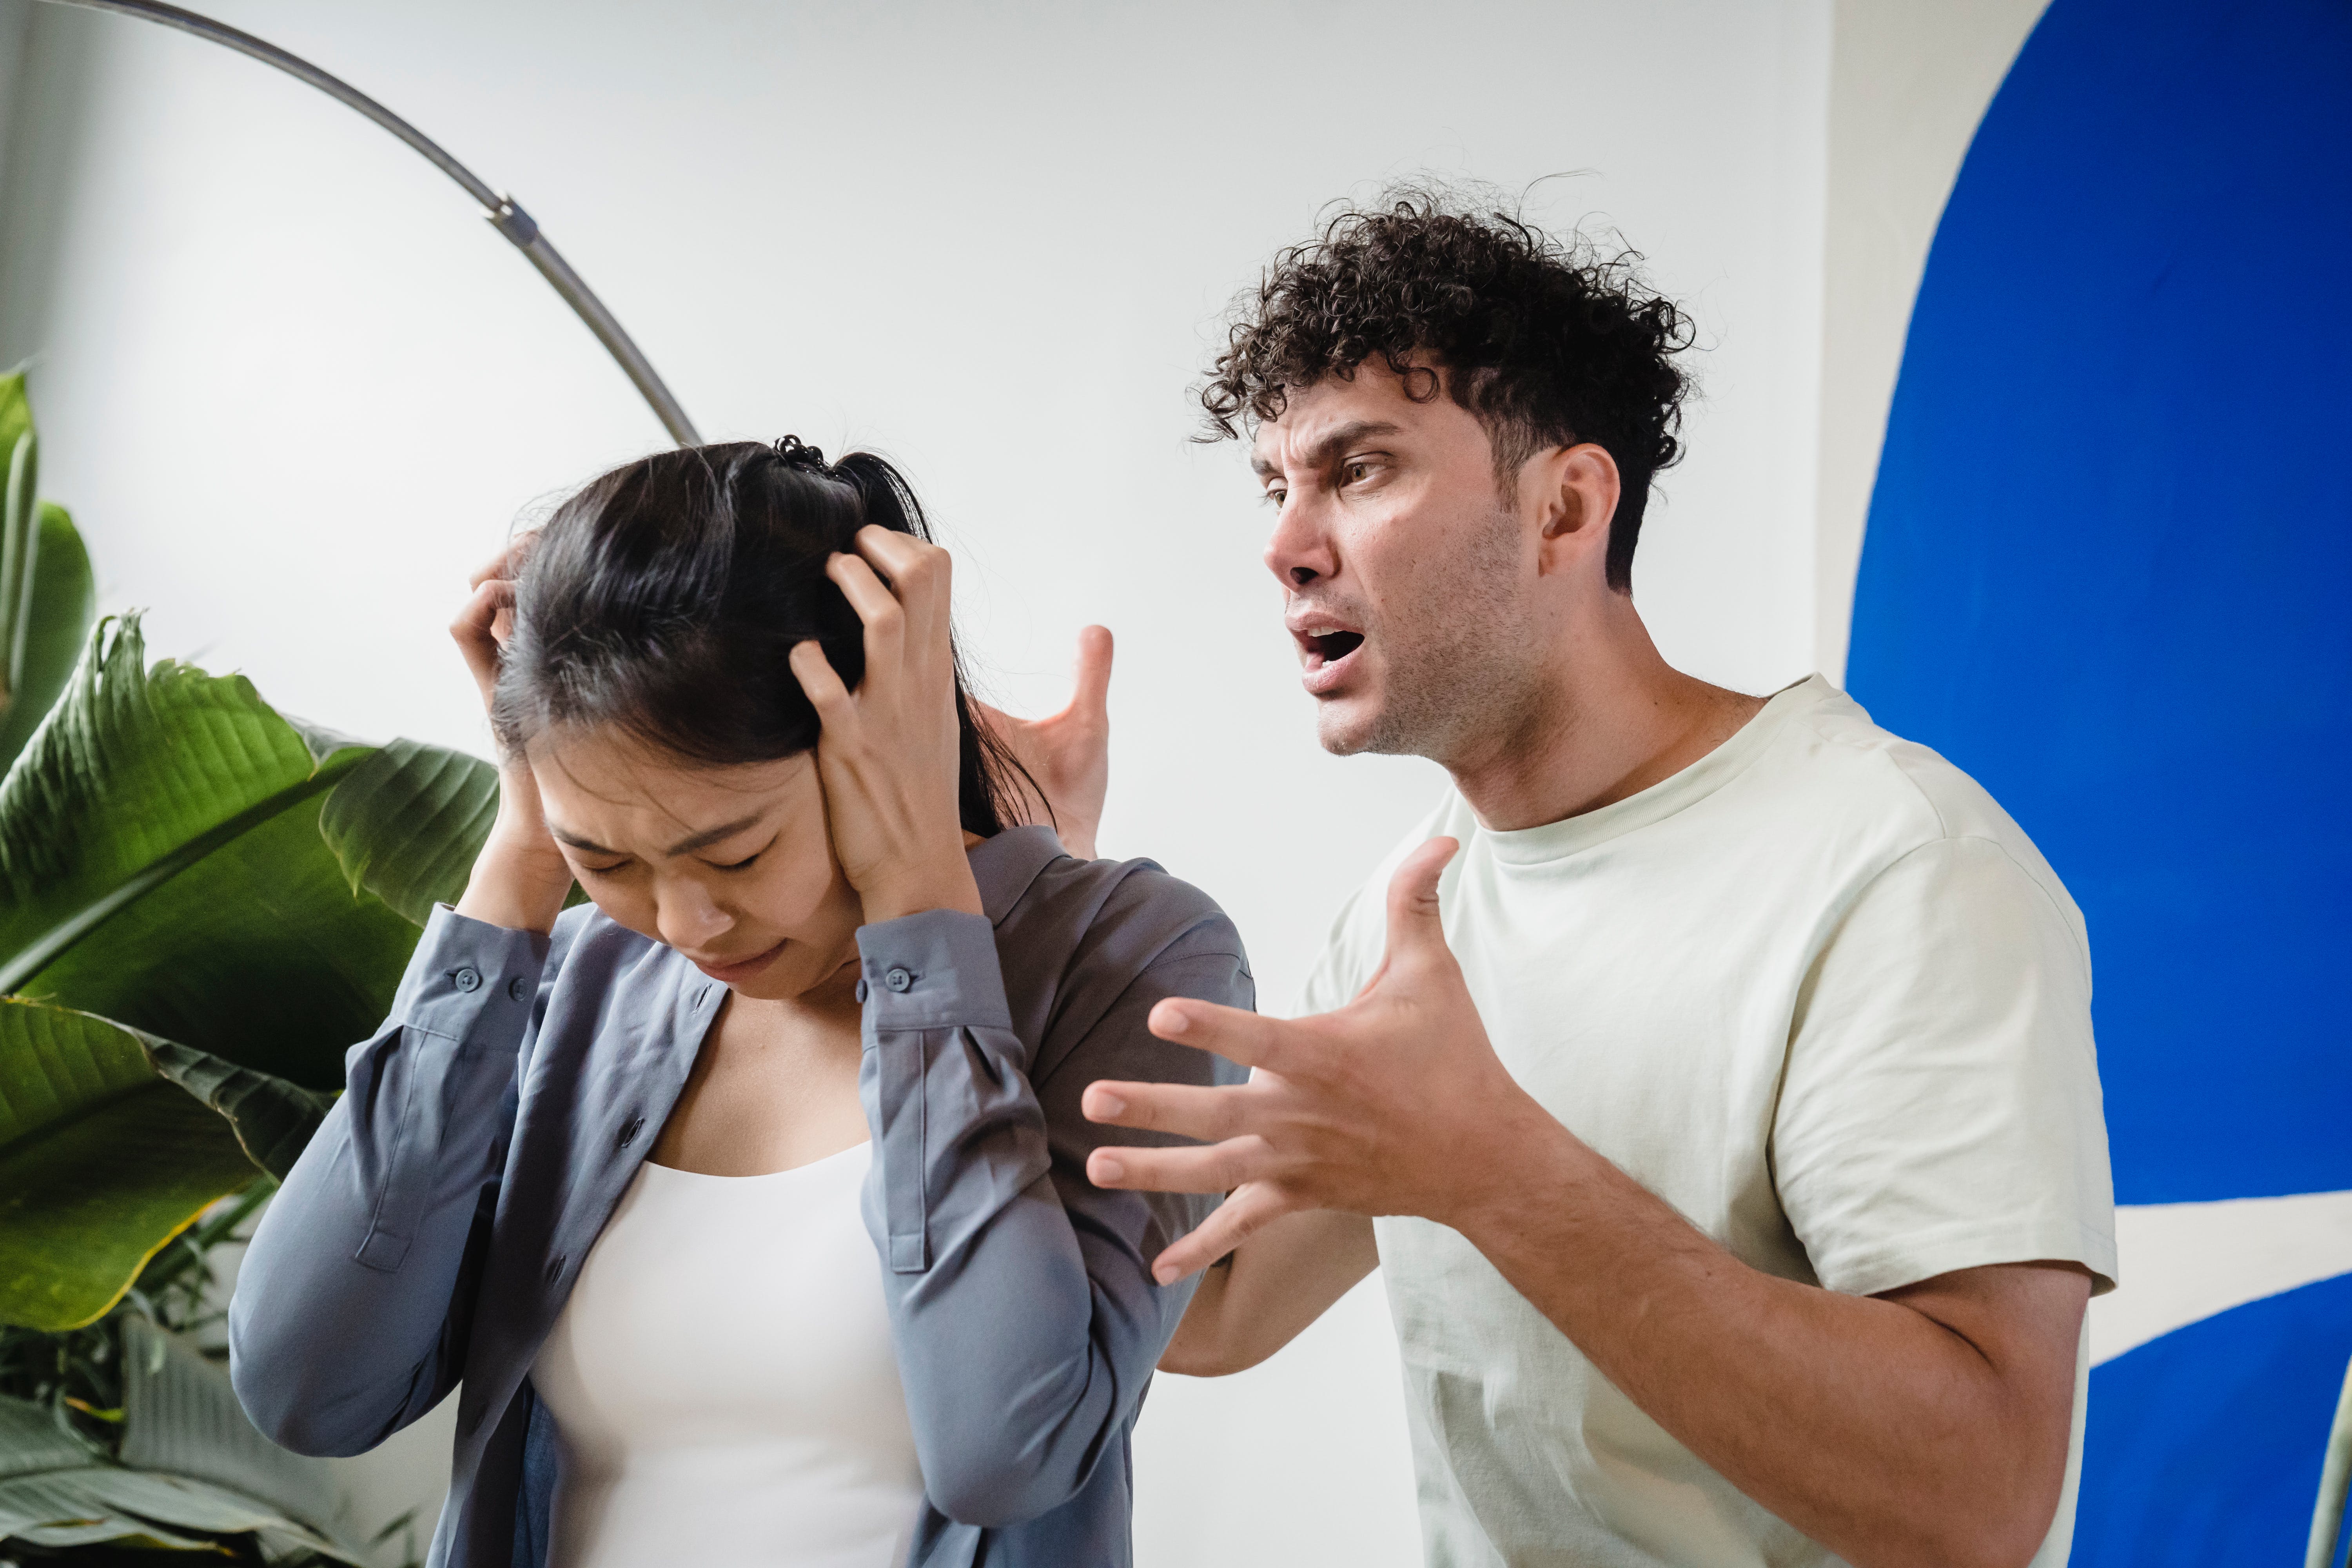 A man screaming at a woman | Source: Pexels